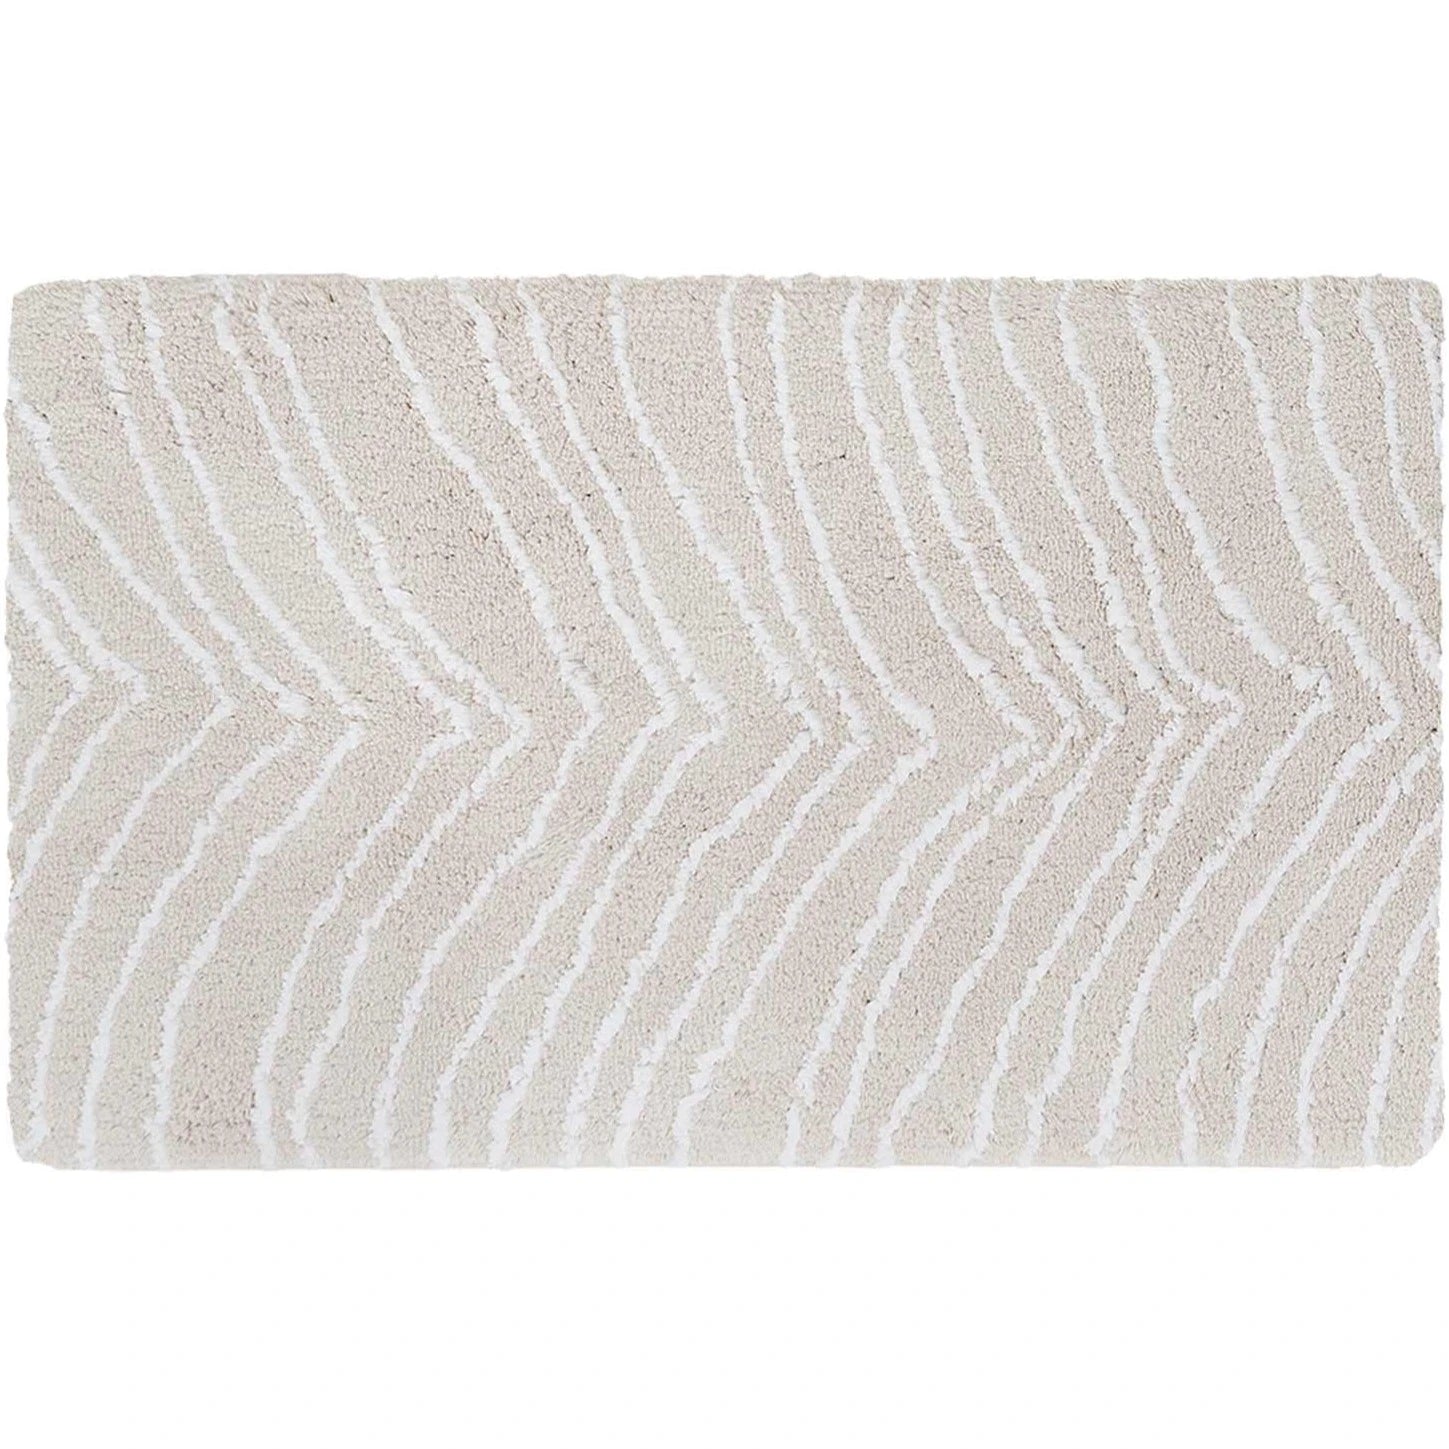 Zelda shell neutral zebra print bath mat in size 21x34